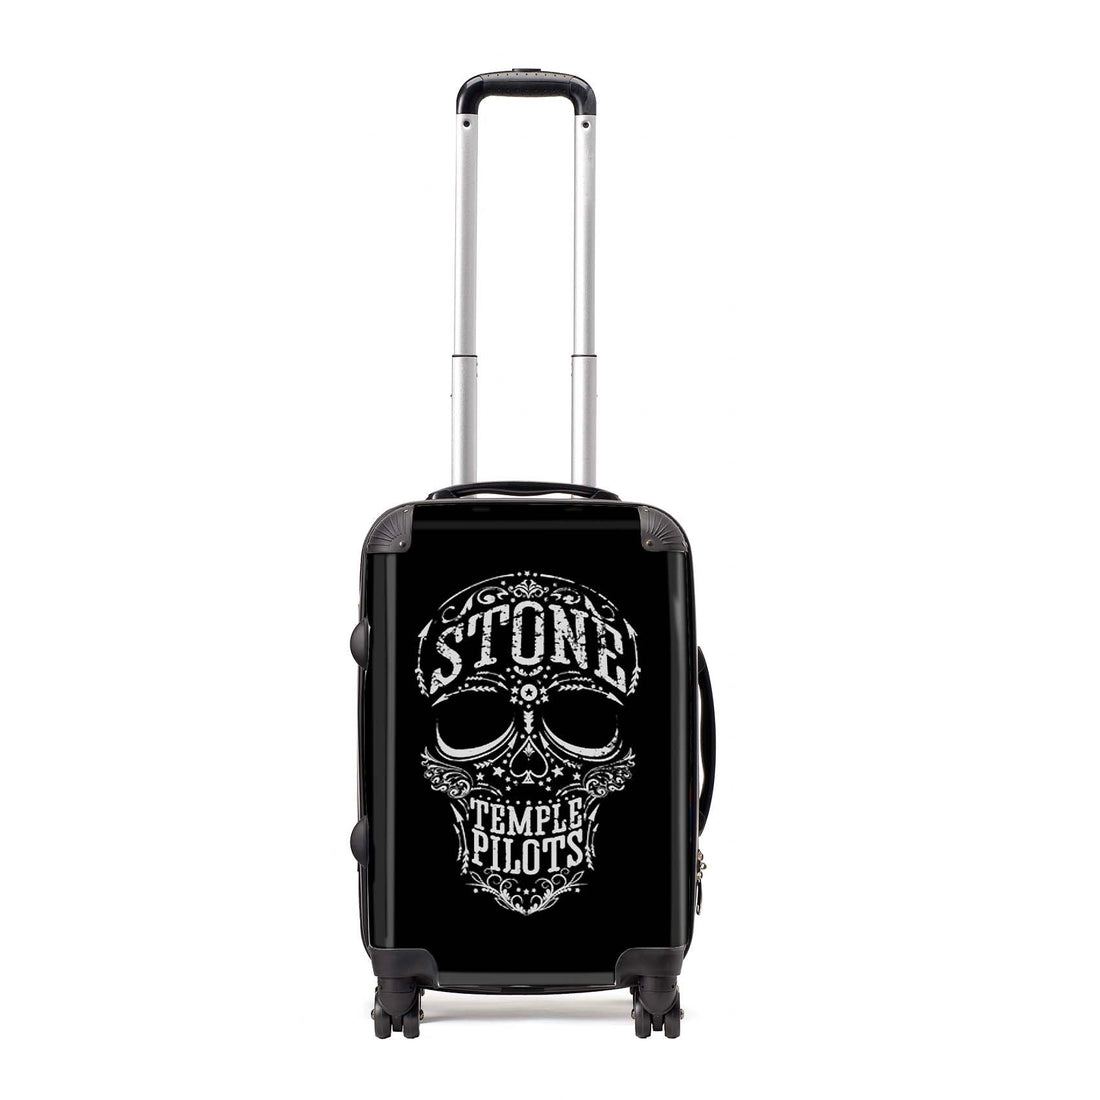 Rocksax Stone Temple Pilots Travel Bag Luggage - Stone Skull